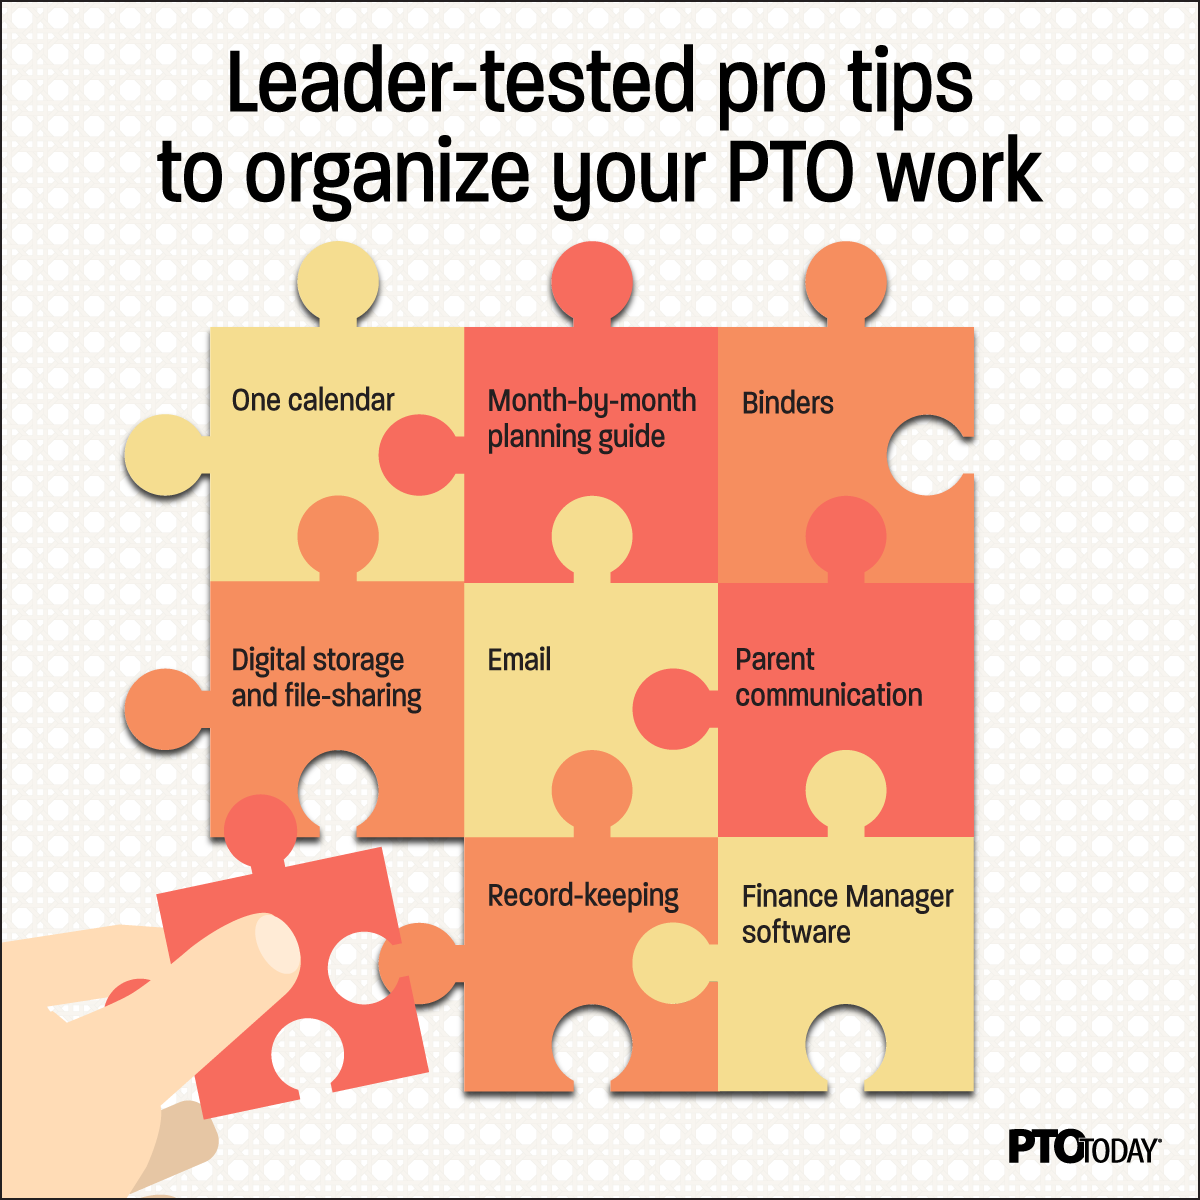 Organize your PTO work